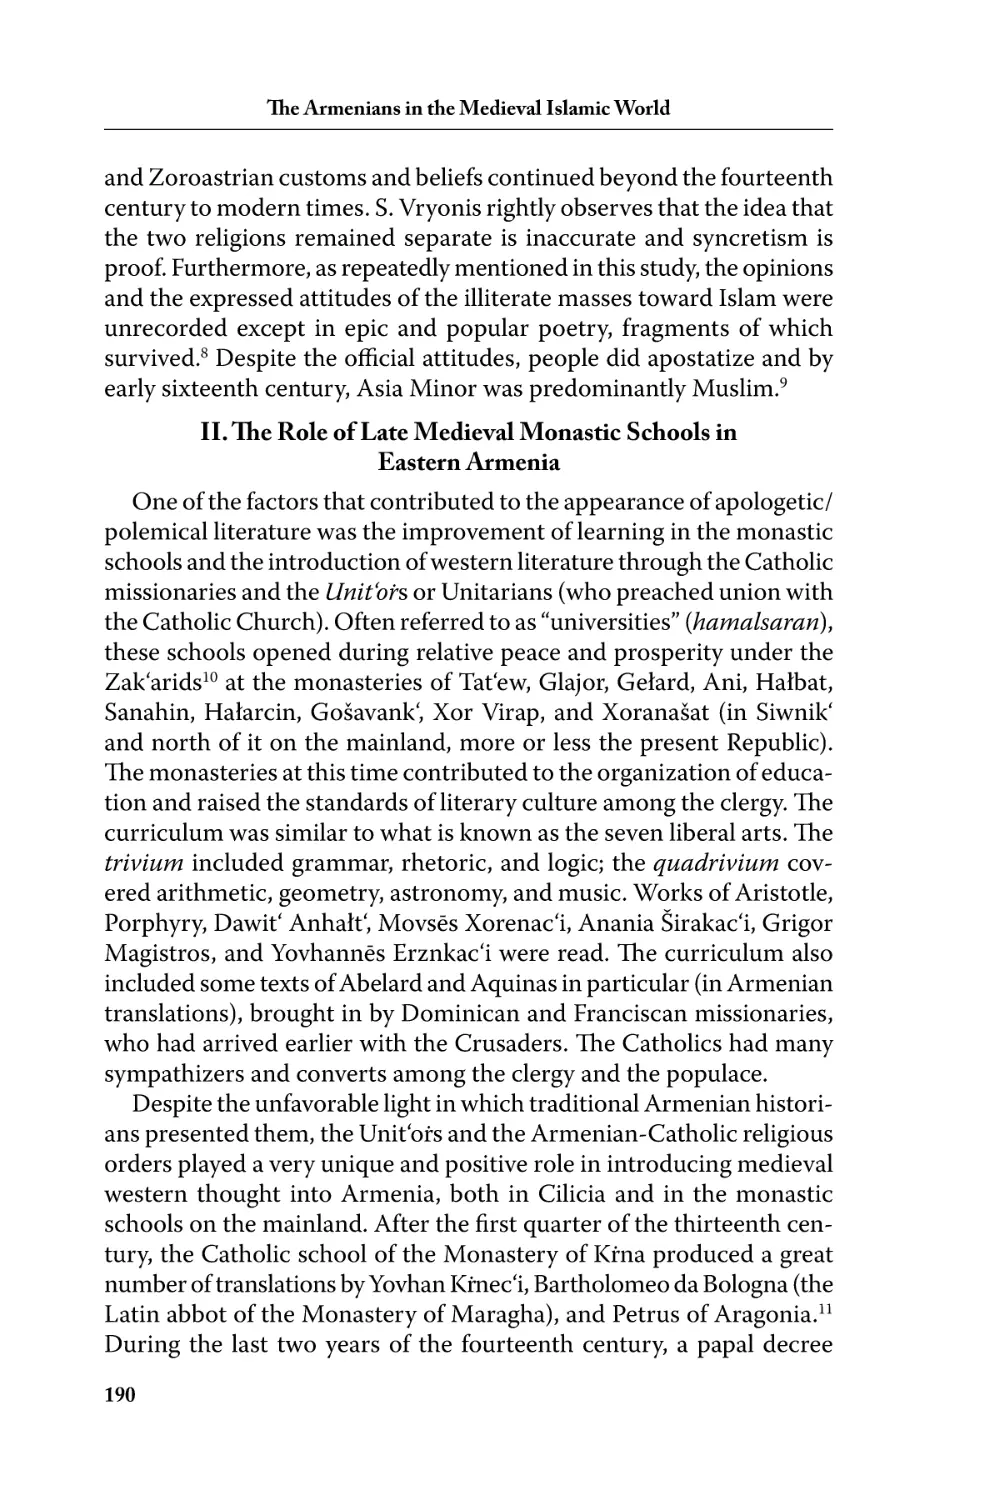 II.  The Role of Late Medieval Monastic Schools in Eastern Armenia